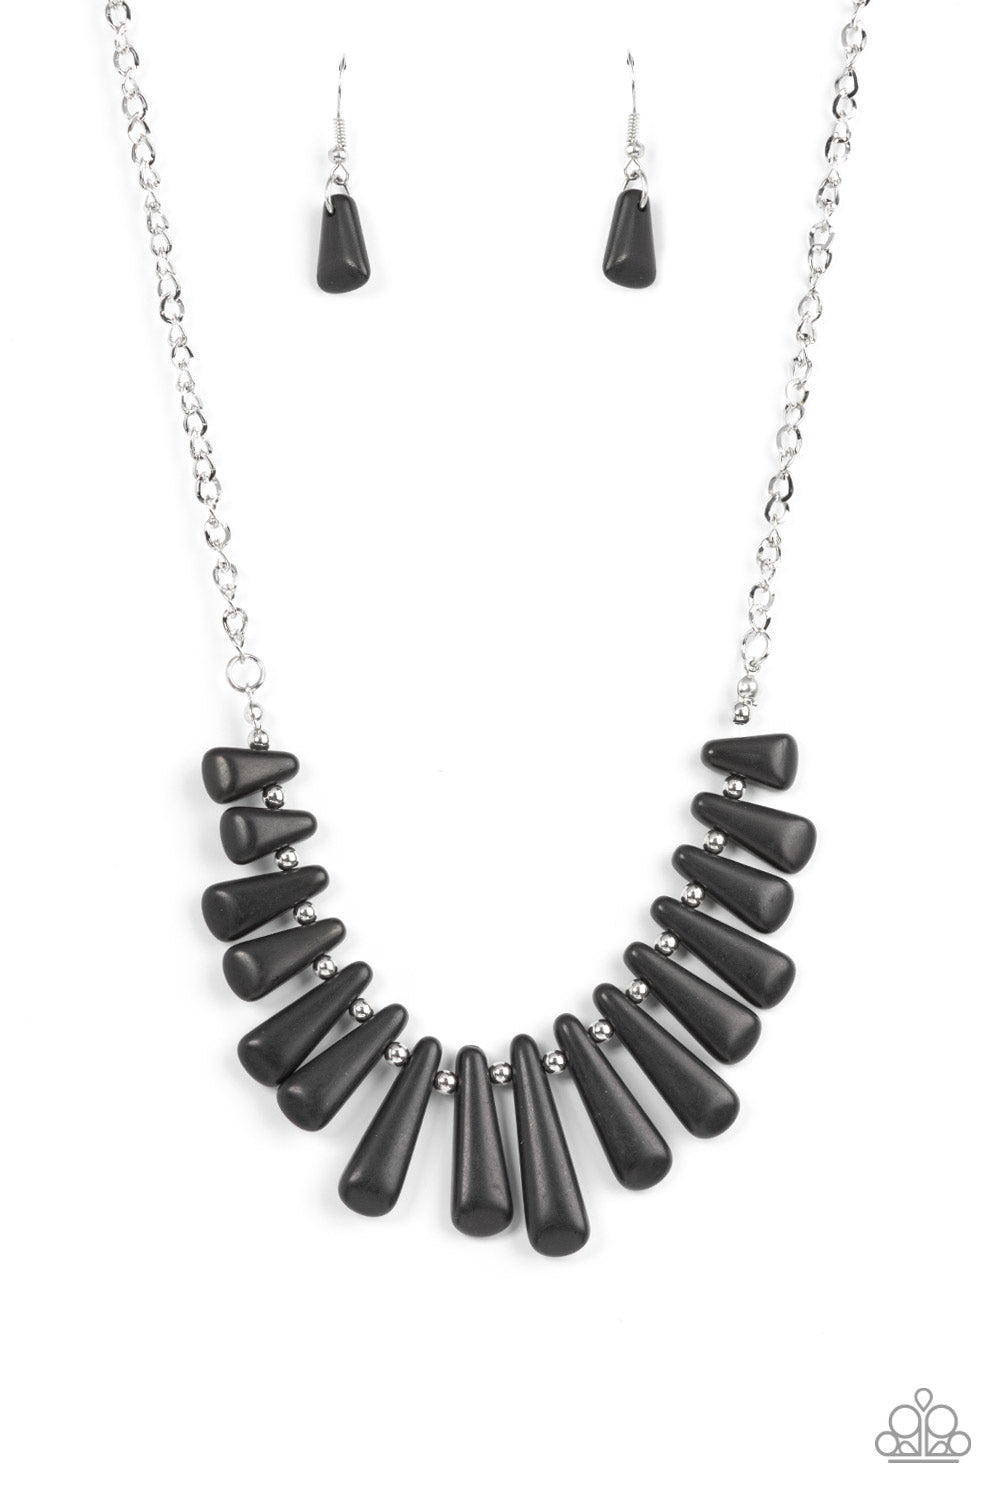 Mojave Empress - black - Paparazzi necklace